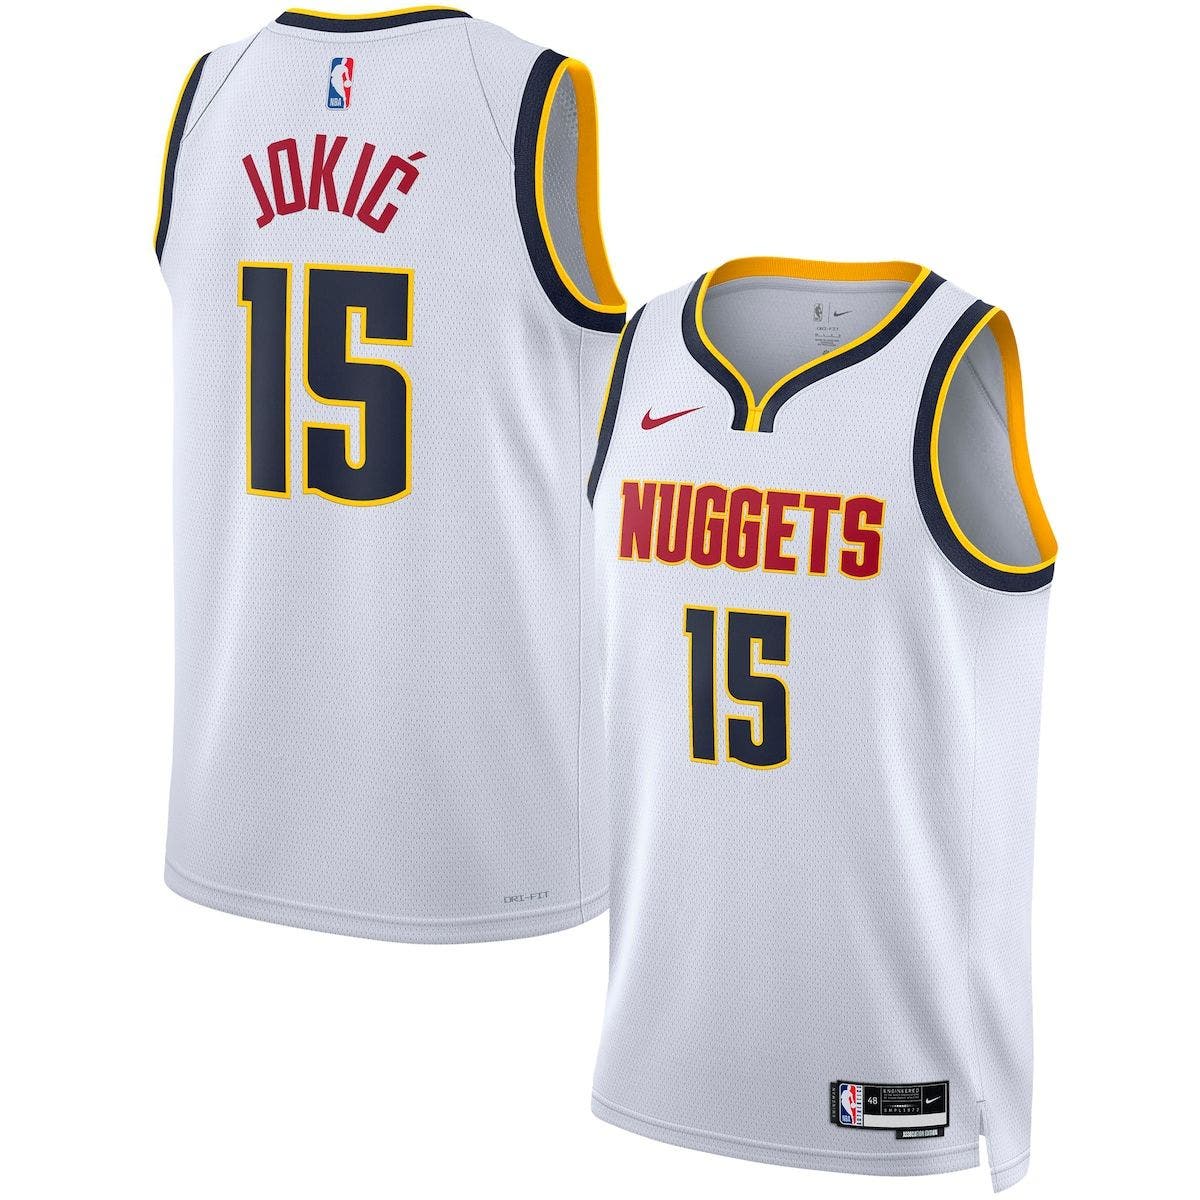 Nuggets No15 Nikola Jokic Black/Gold Basketball Swingman Limited Edition Jersey